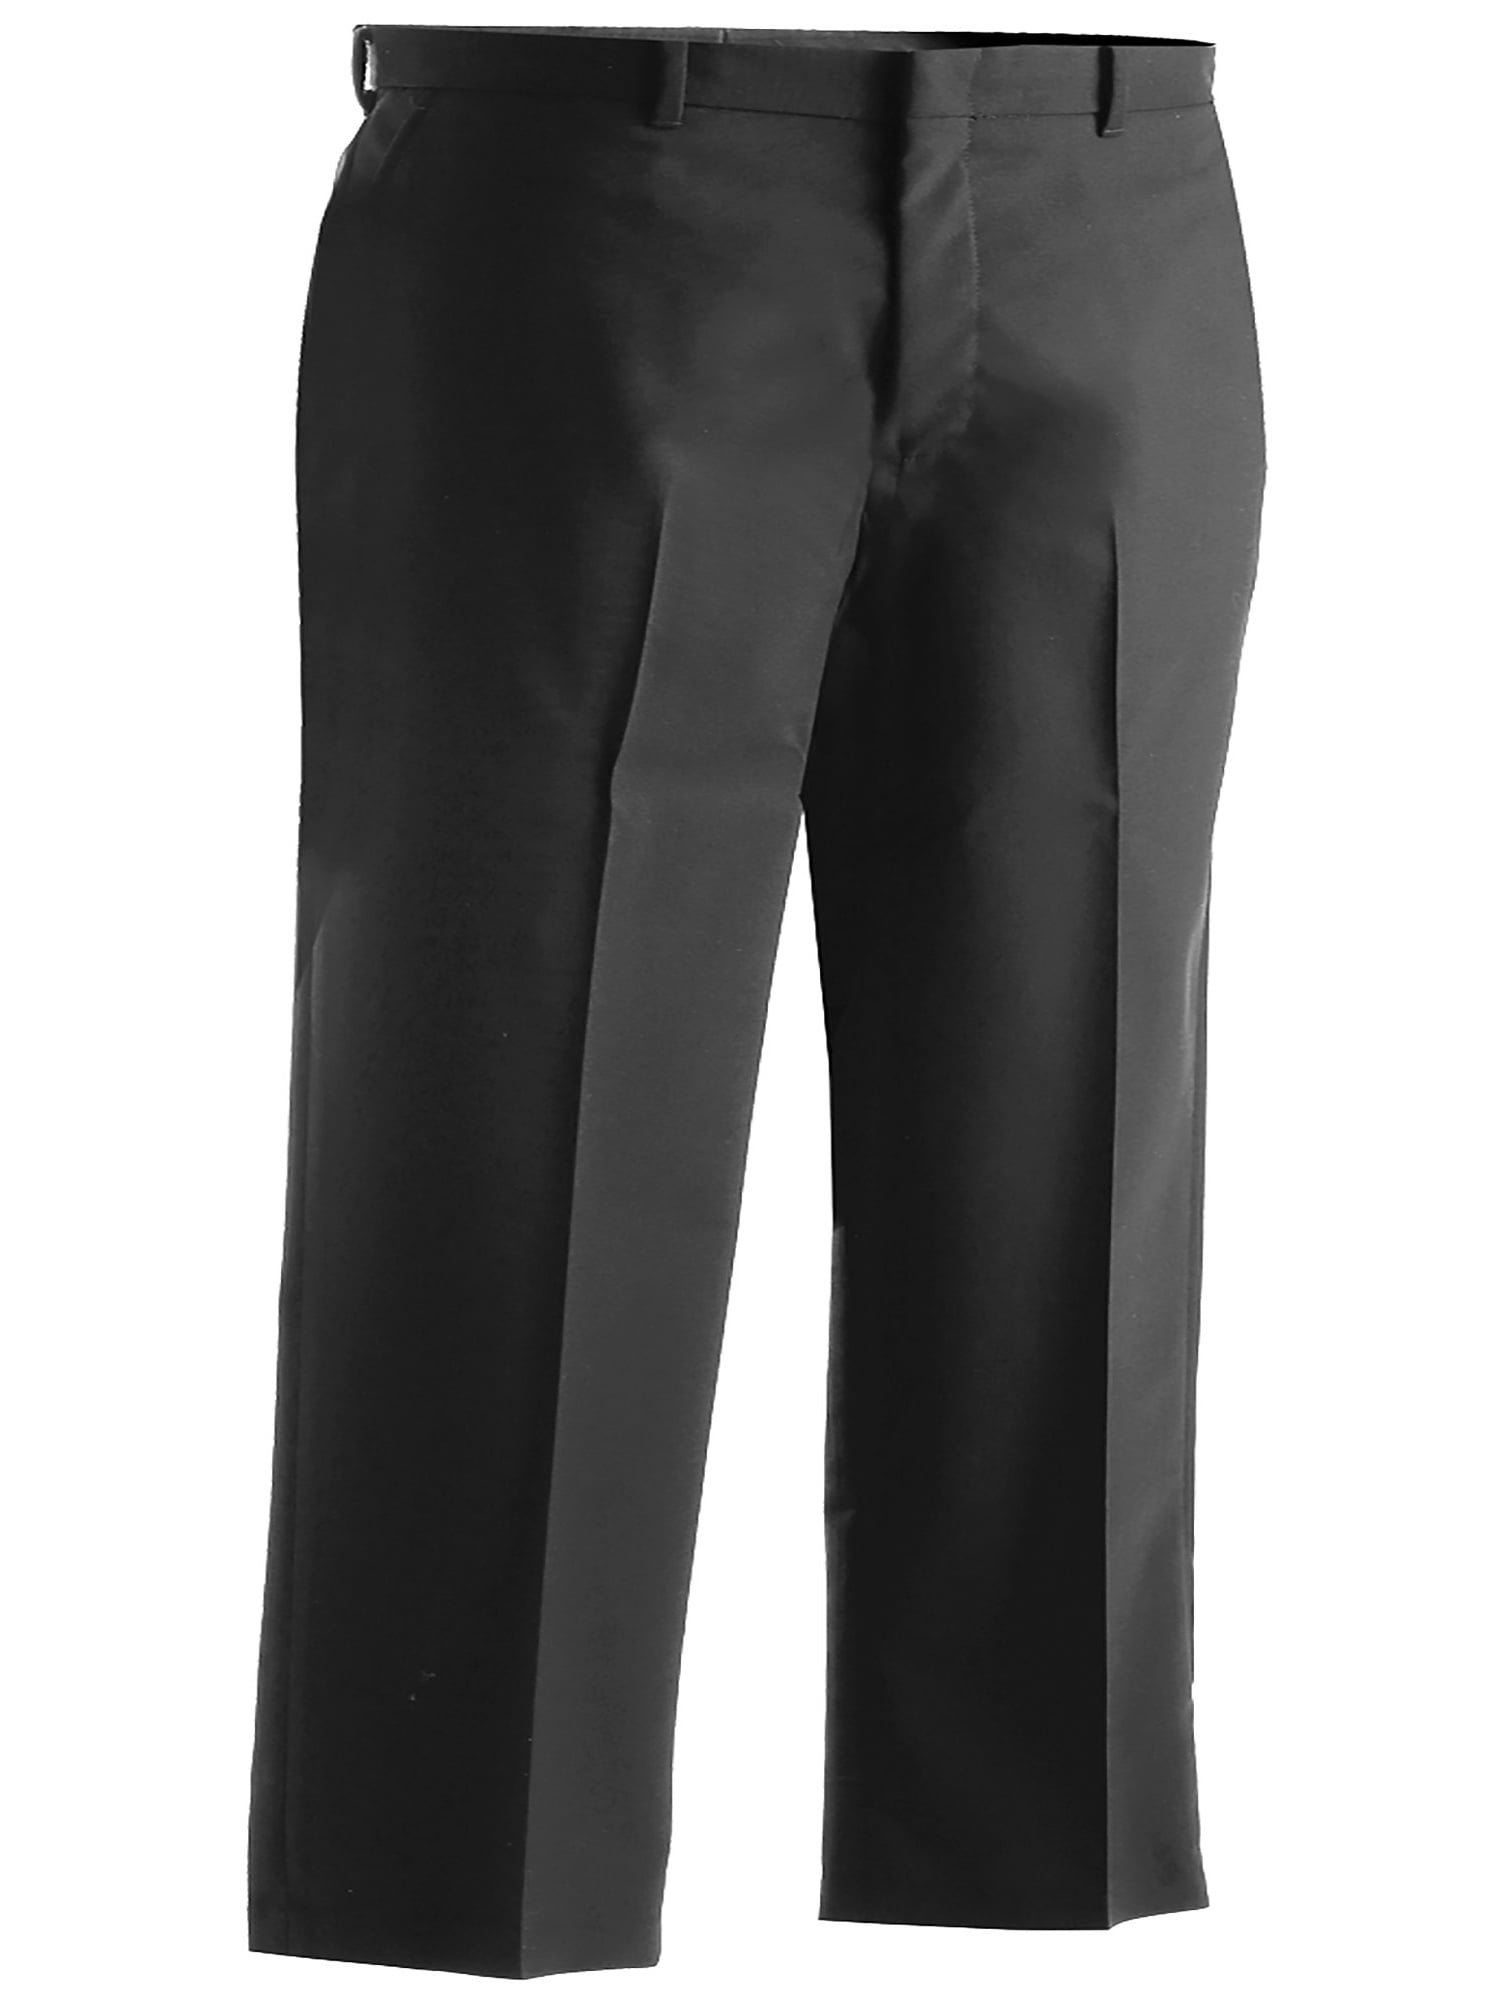 Edwards - Edwards Garment Men's Lightweight Flat Front Dress Pant ...